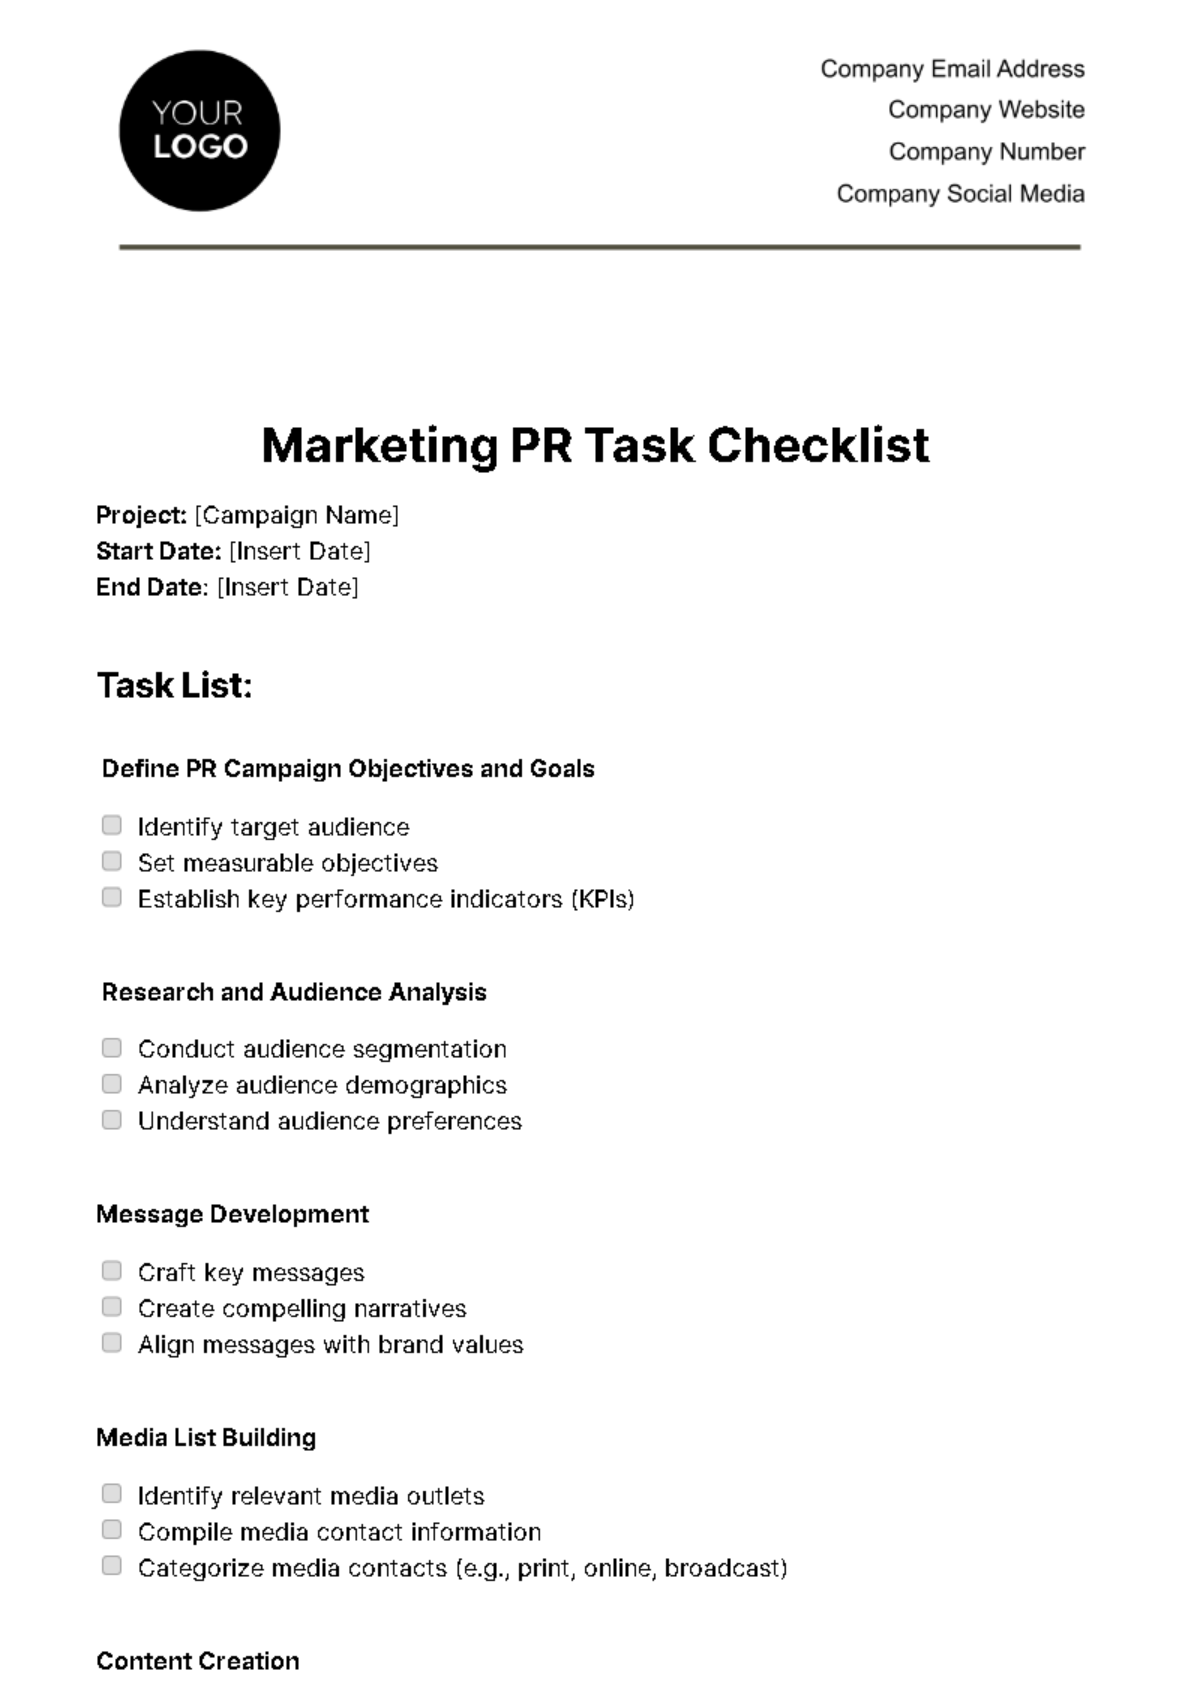 Free Marketing PR Task Checklist Template